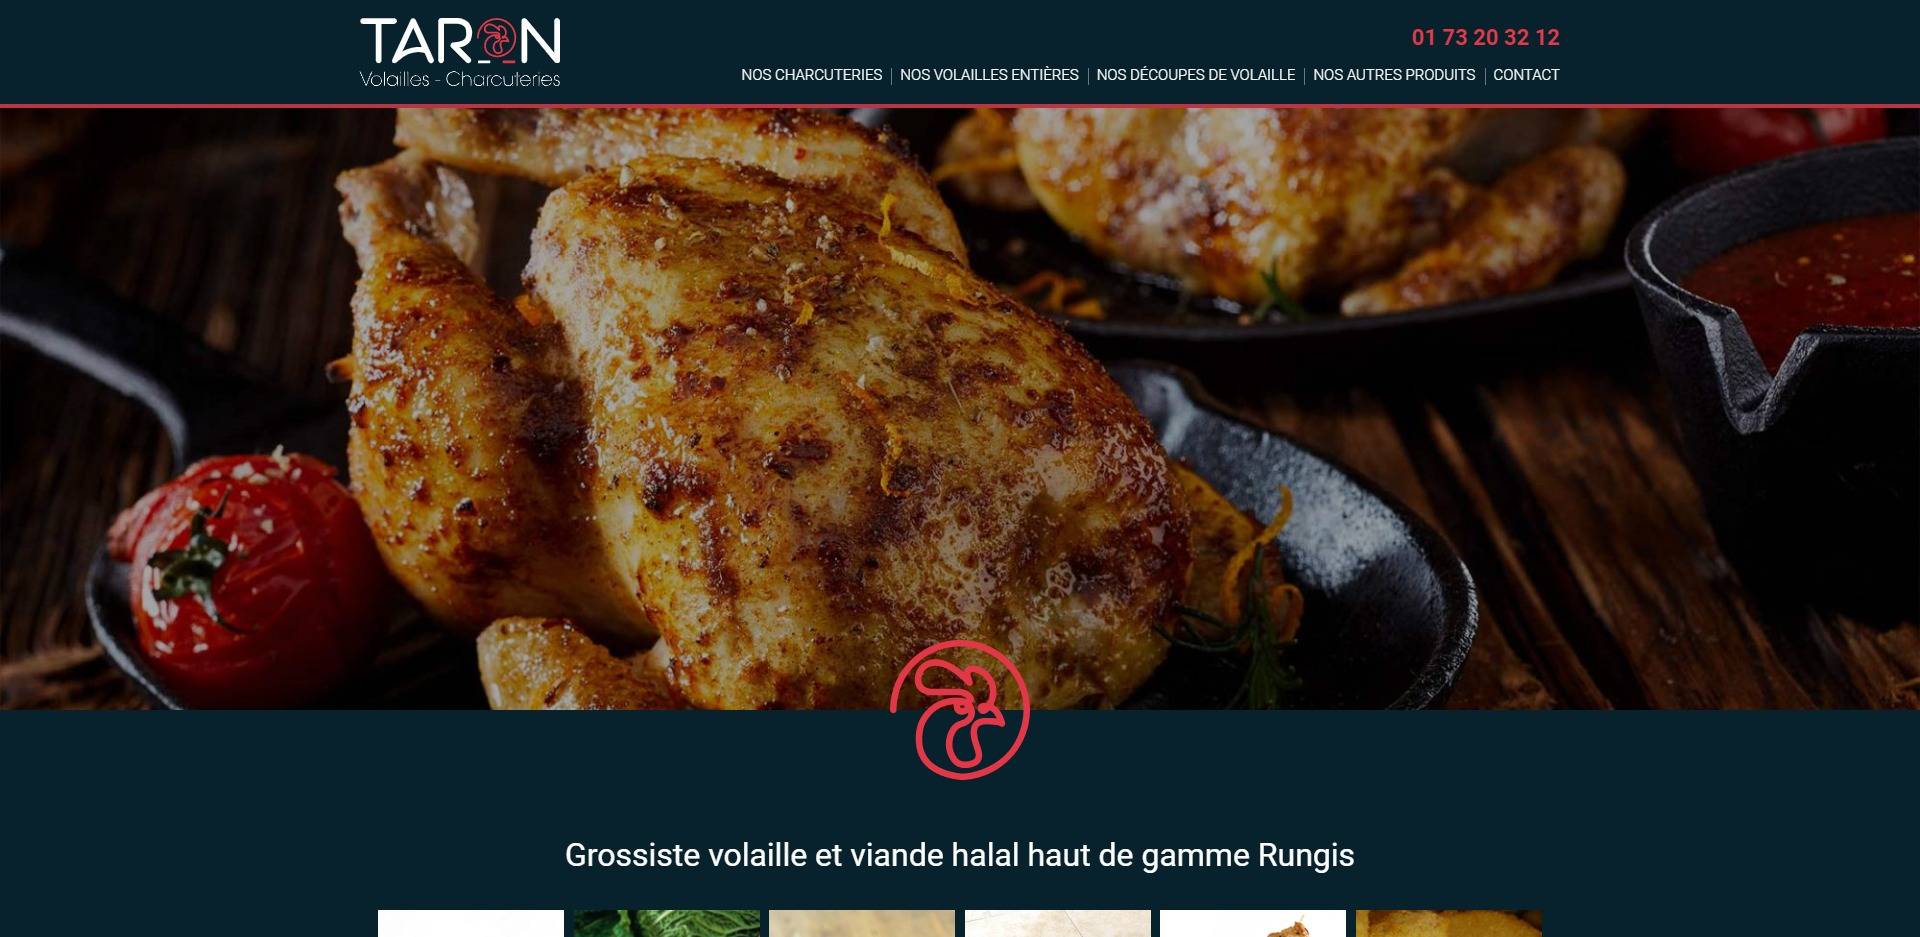  Taron Grossiste viande halal haut de gamme en France